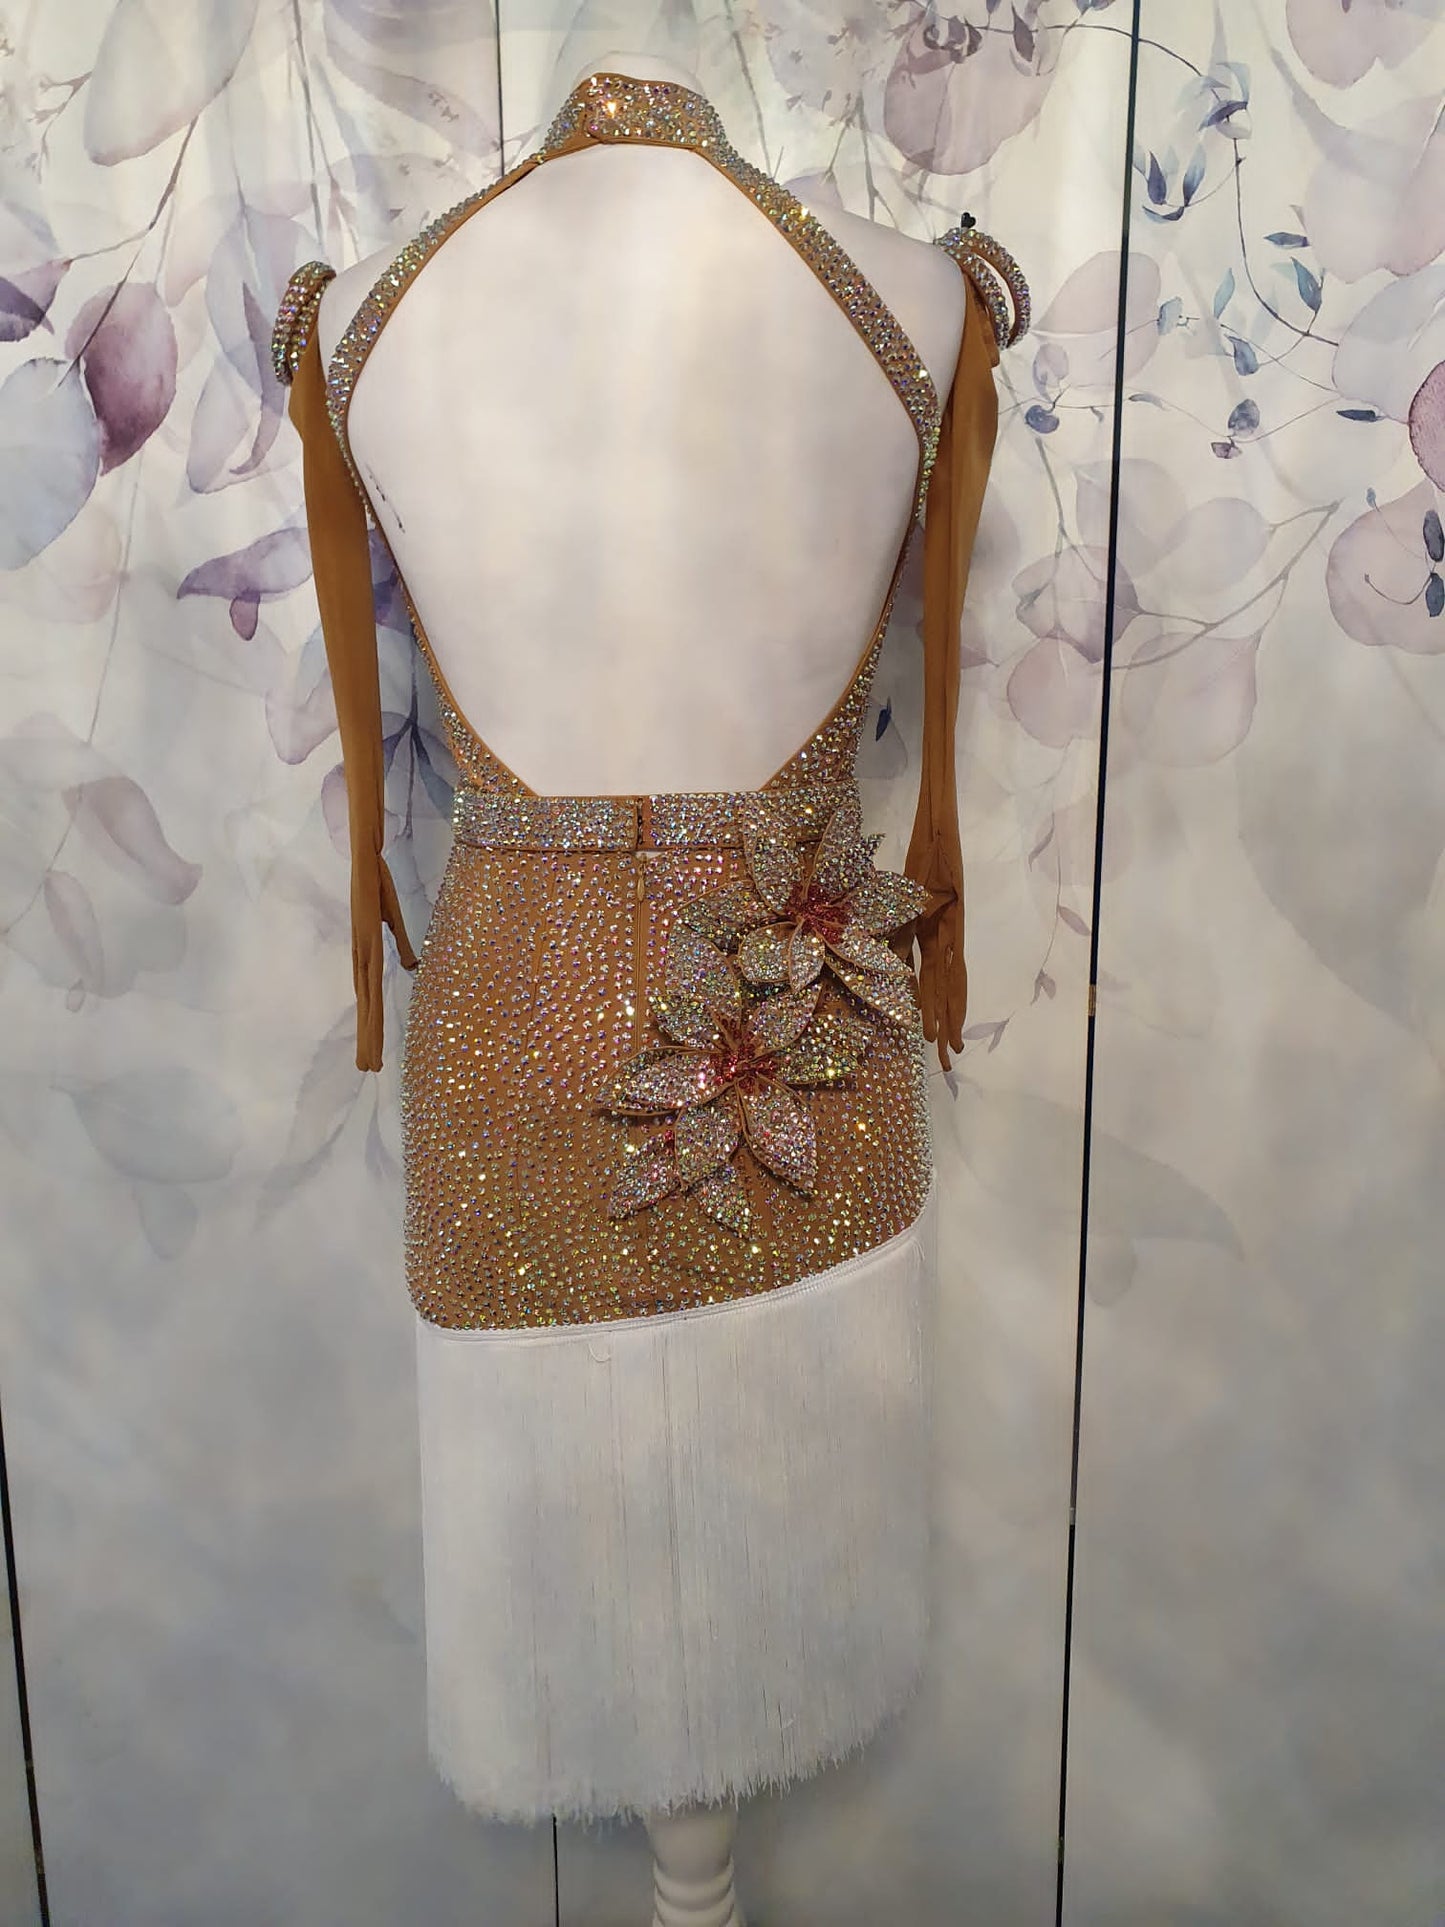 299 Tan & white Latin Dress. 3D flower detailing with white fringe skirt. AB & Rose stoning with separate belt.